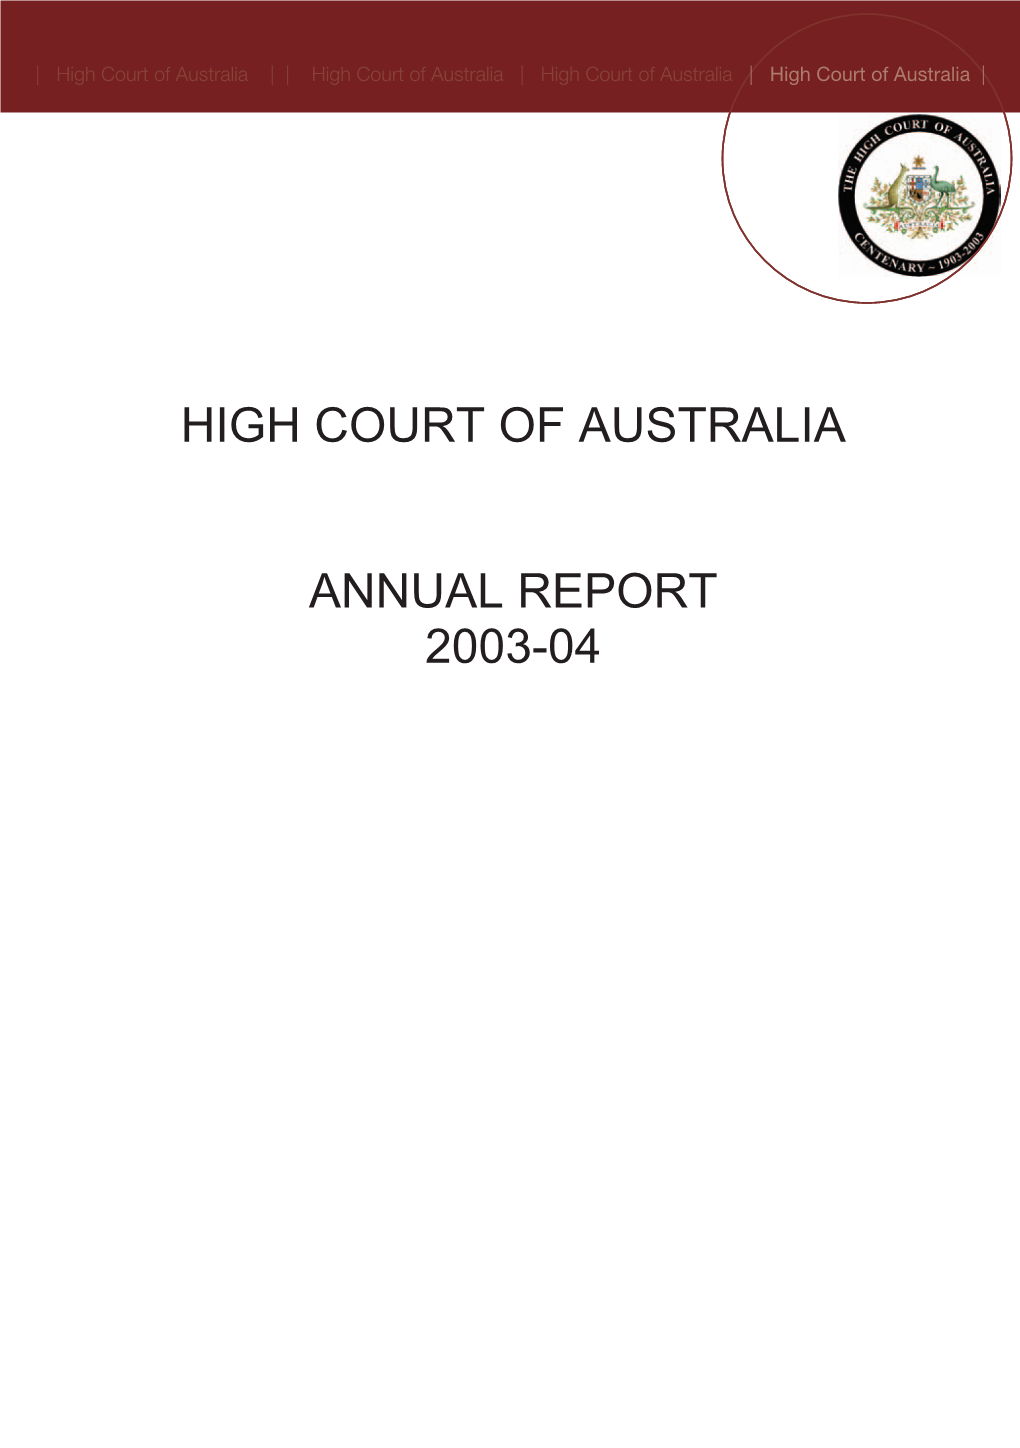 High Court of Australia Annual Report 2003-04